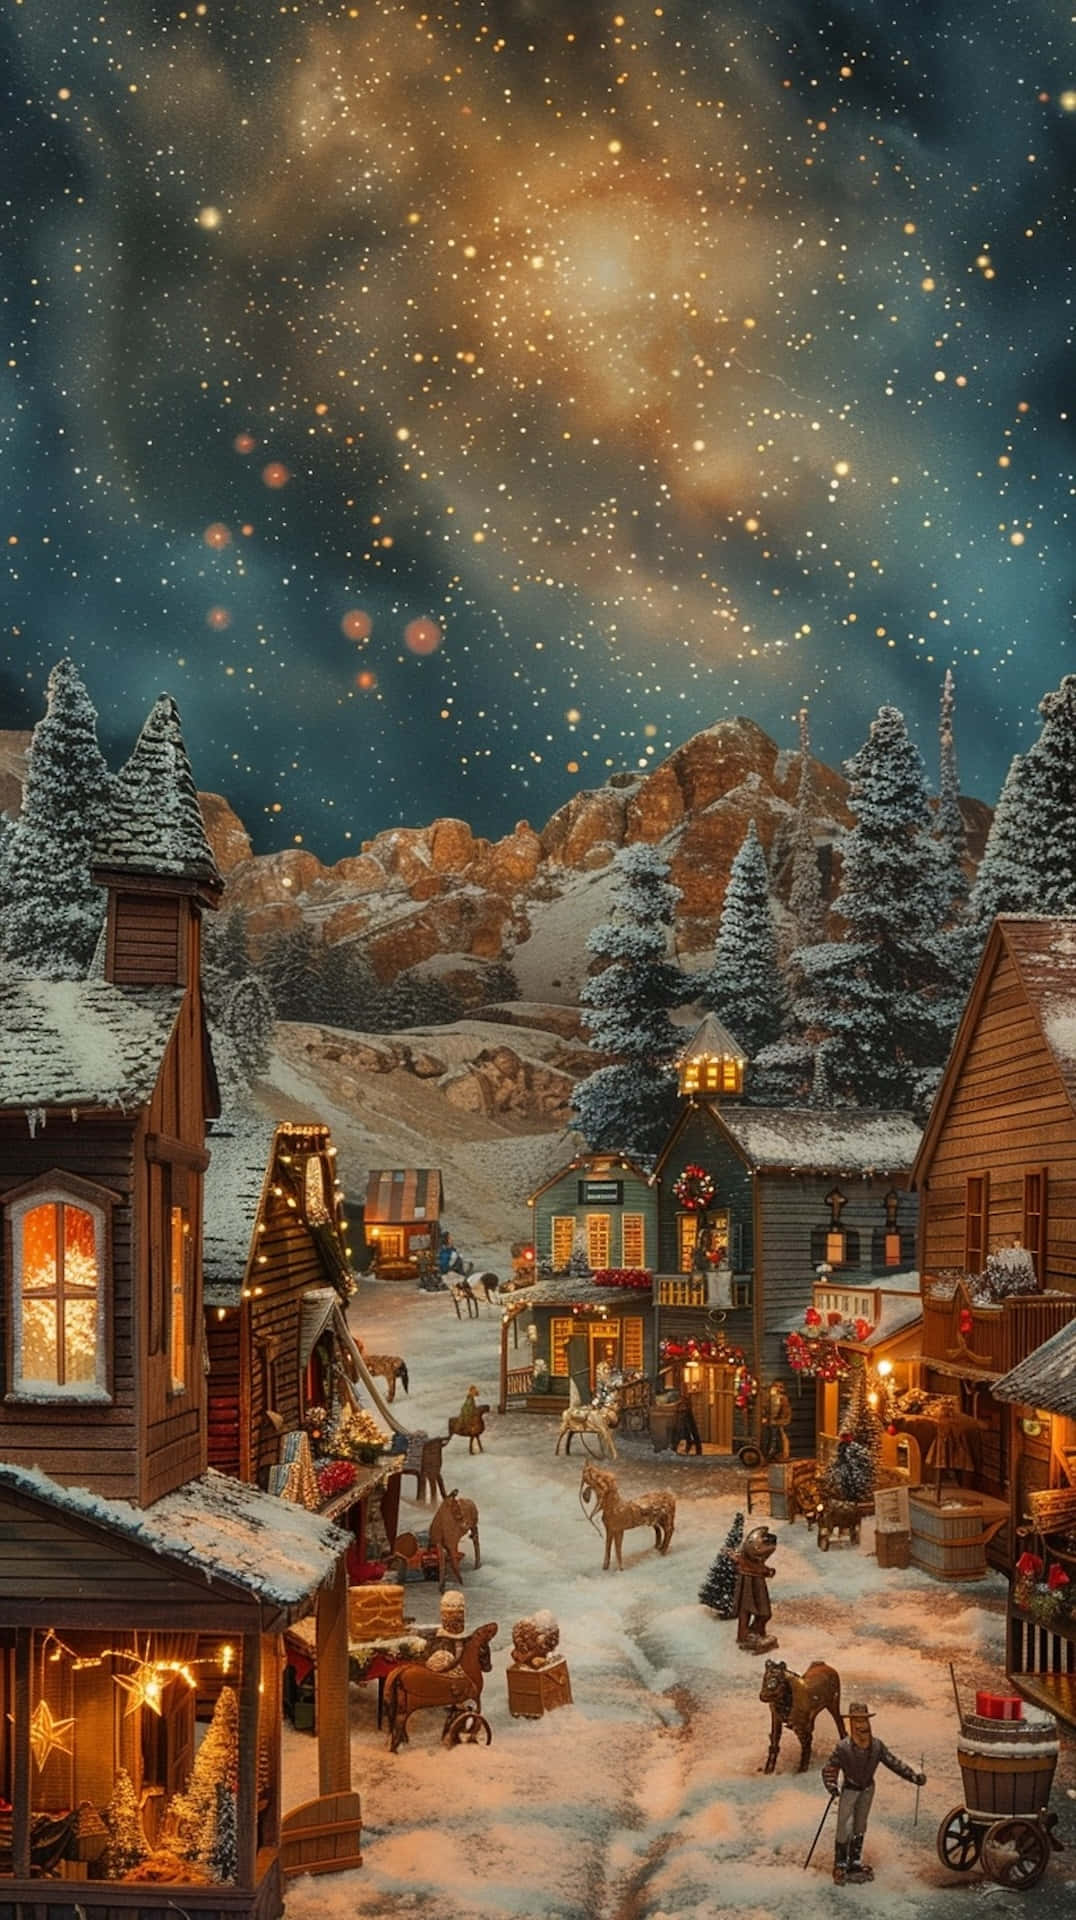 Enchanted Christmas Village Night Wallpaper